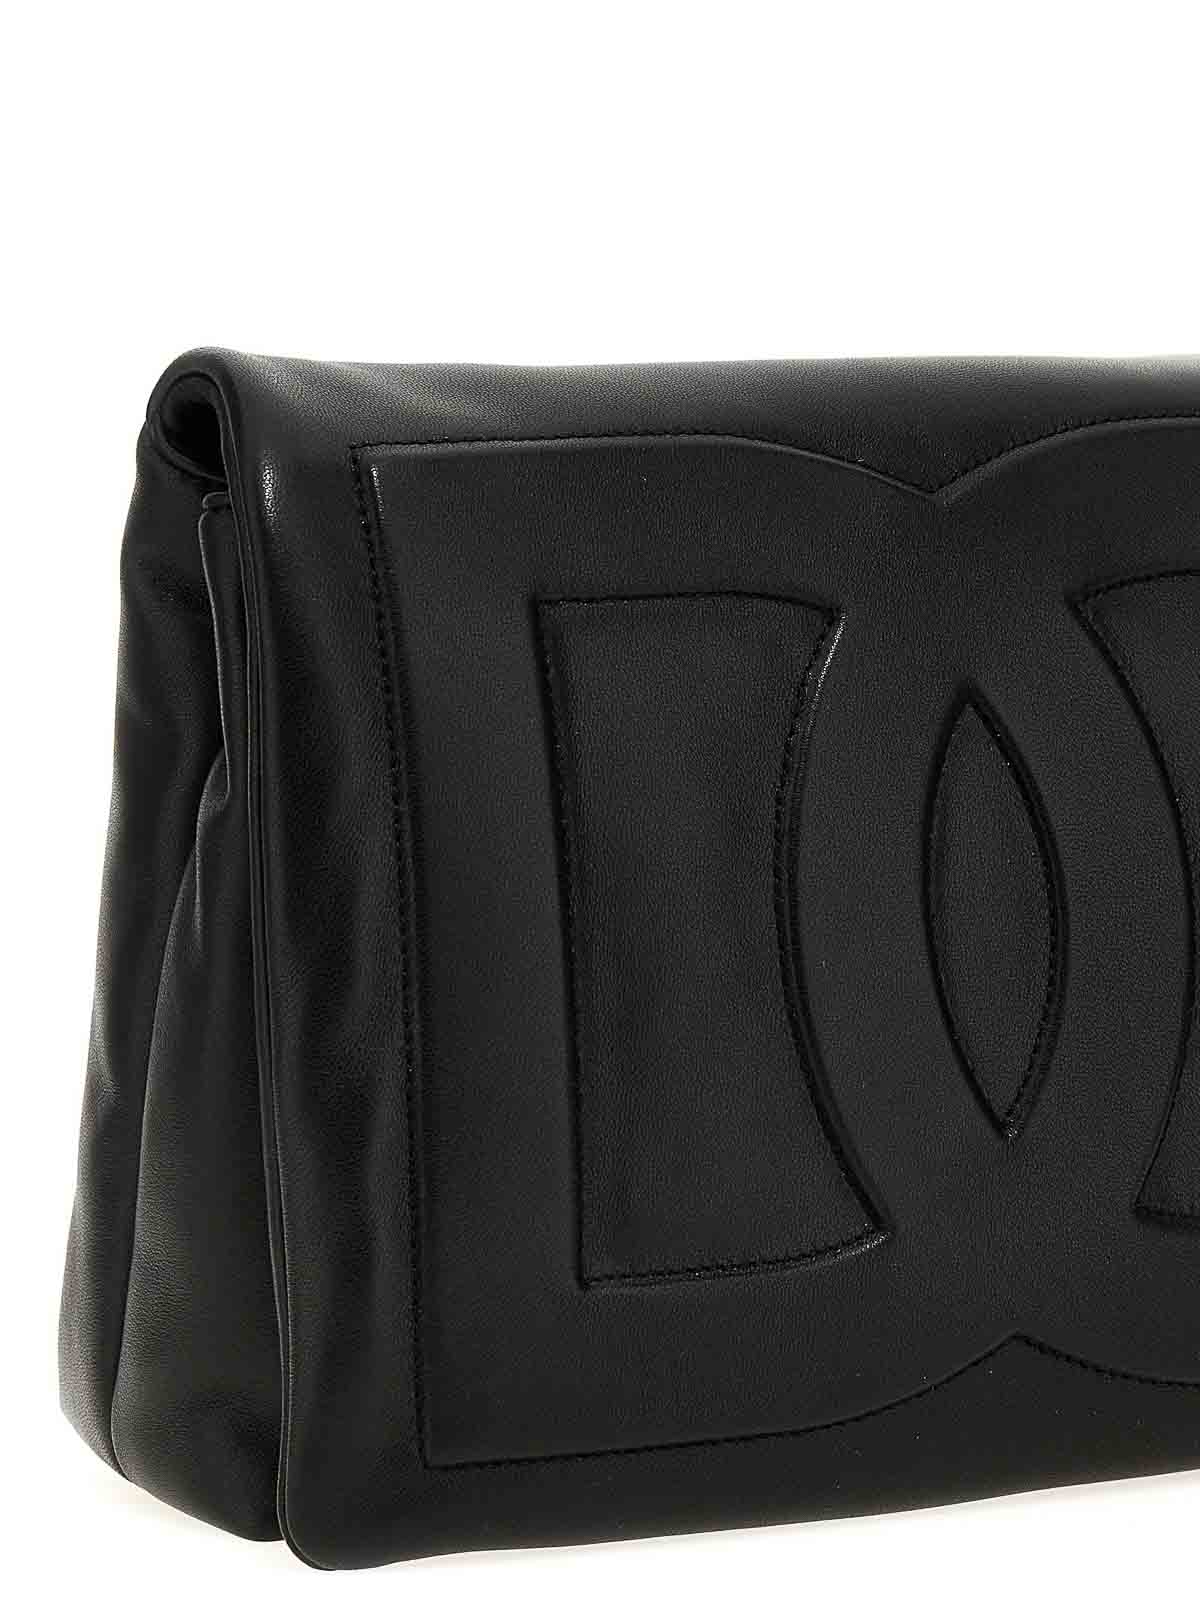 Dolce & Gabbana Pochette Dg in Black